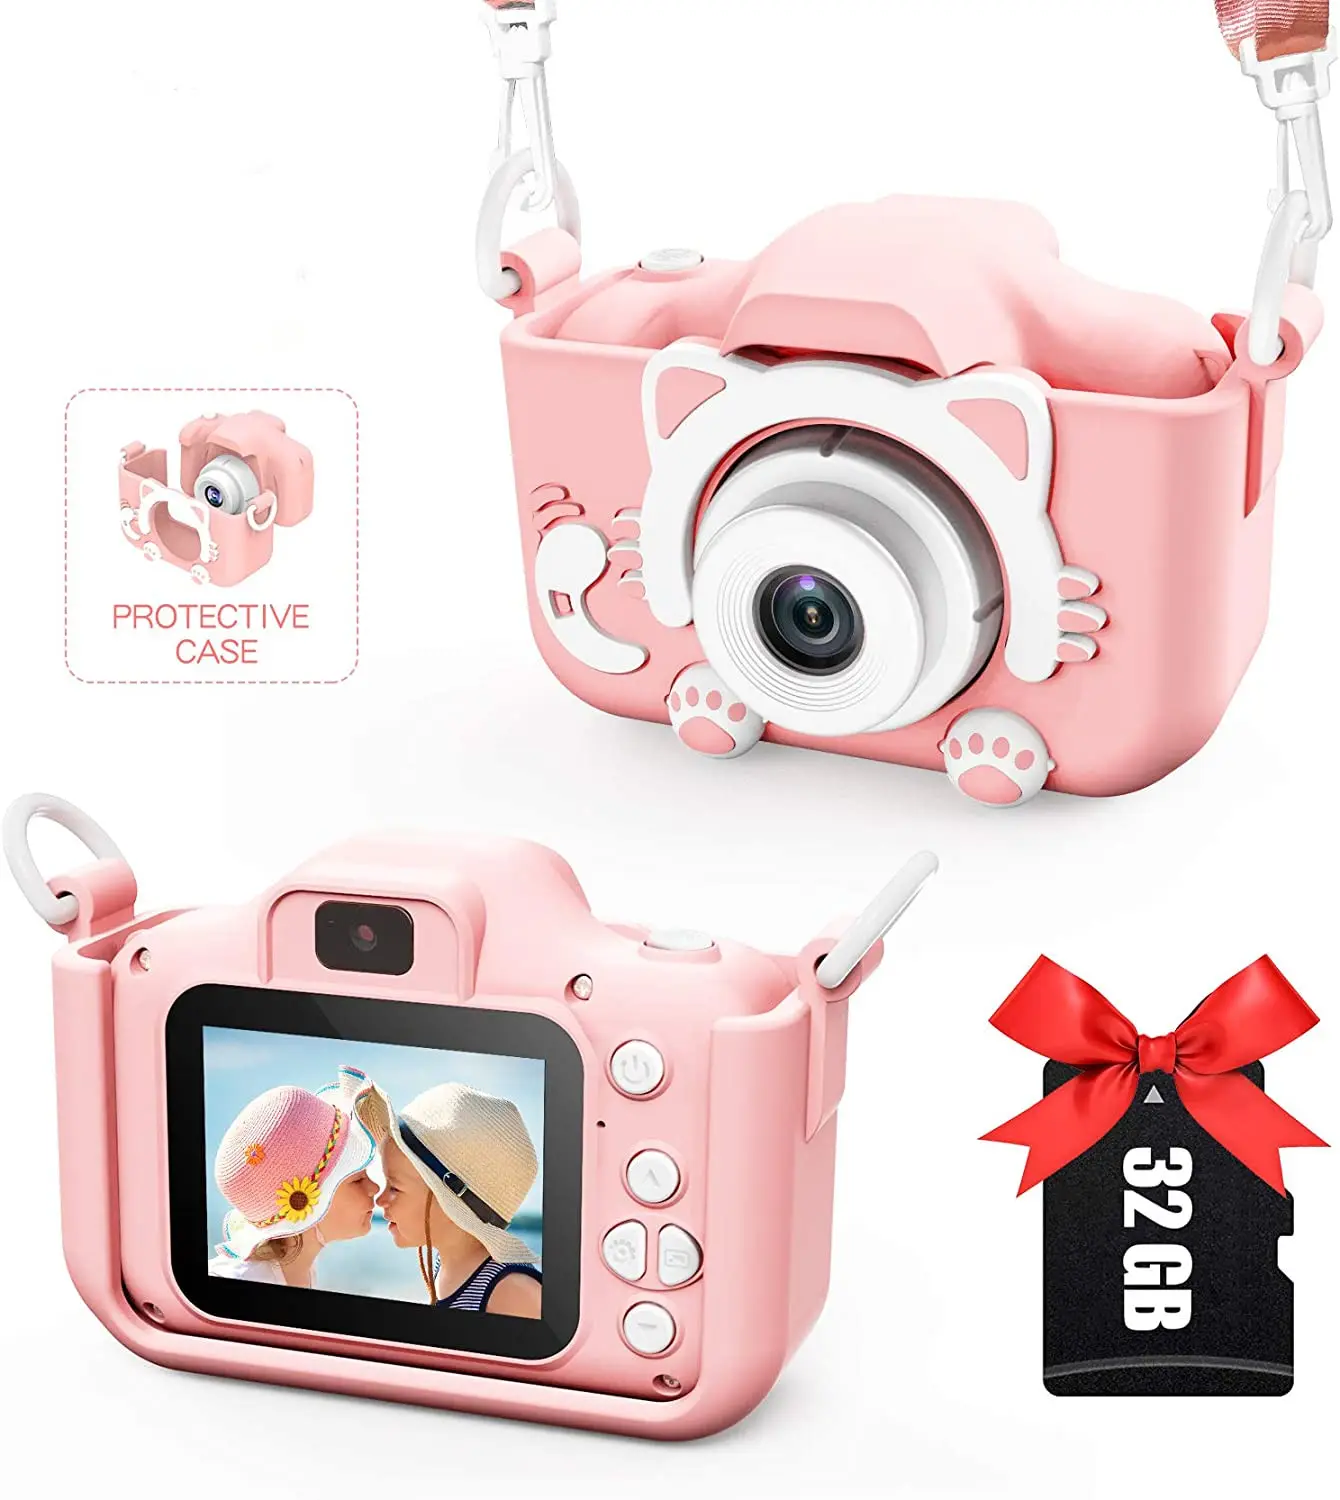 1080P HD Camcorder डिजिटल बच्चे कैमरा प्यारा खिलौना बिल्ली कुत्ते गेंडा बच्चों के कैमरा खिलौने बच्चों स्वफ़ोटो बच्चा बच्चे कैमरा